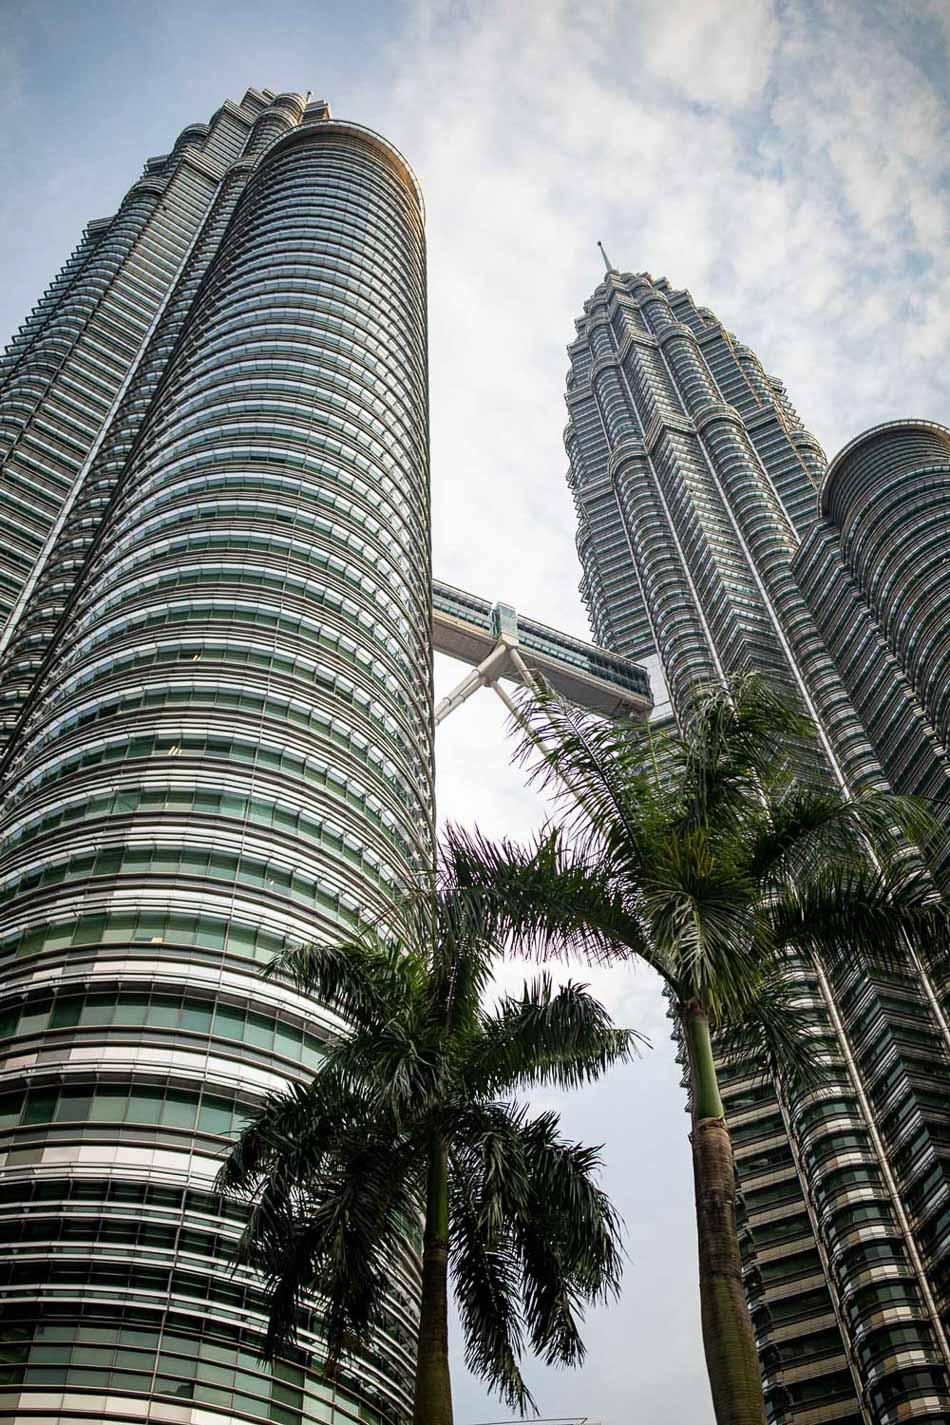 Petronas towers from bottom in Kuala Lumpur, Malaysia | Travel Photography